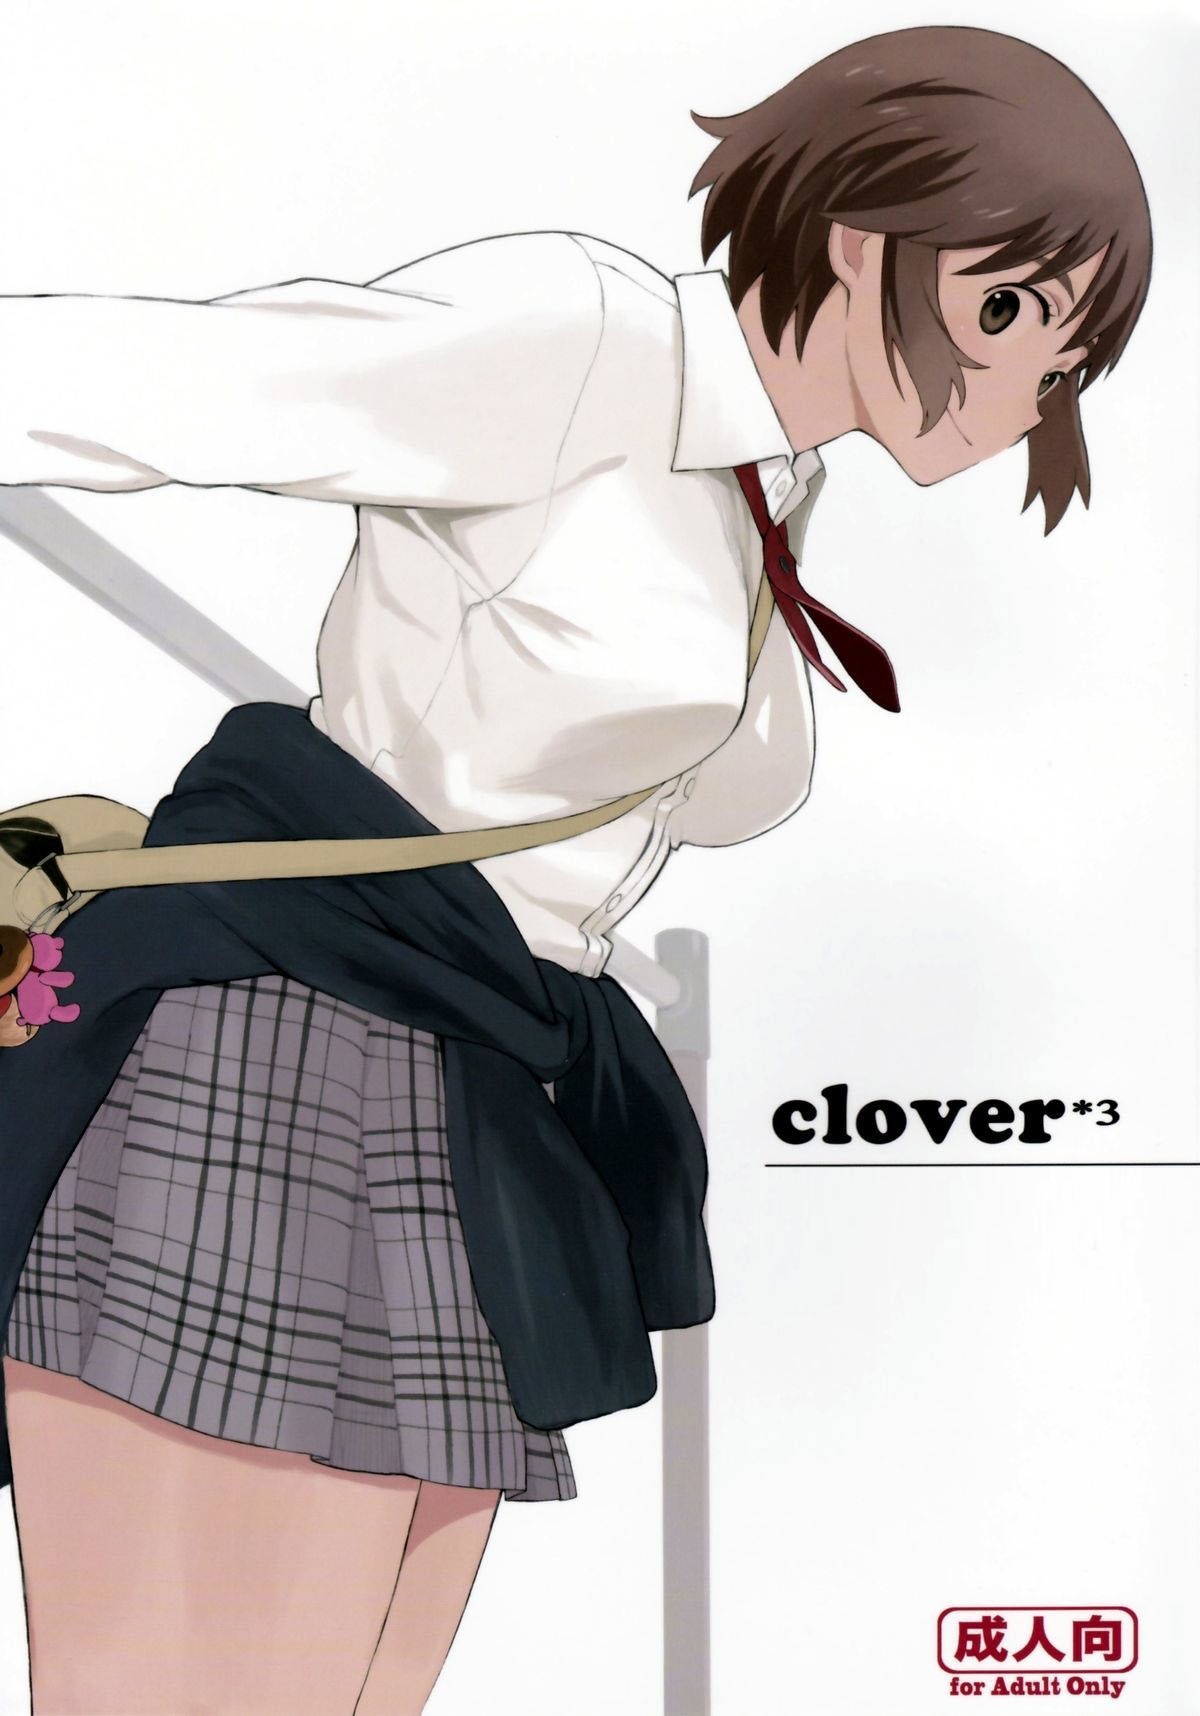 Clover * 3 - Foto 1